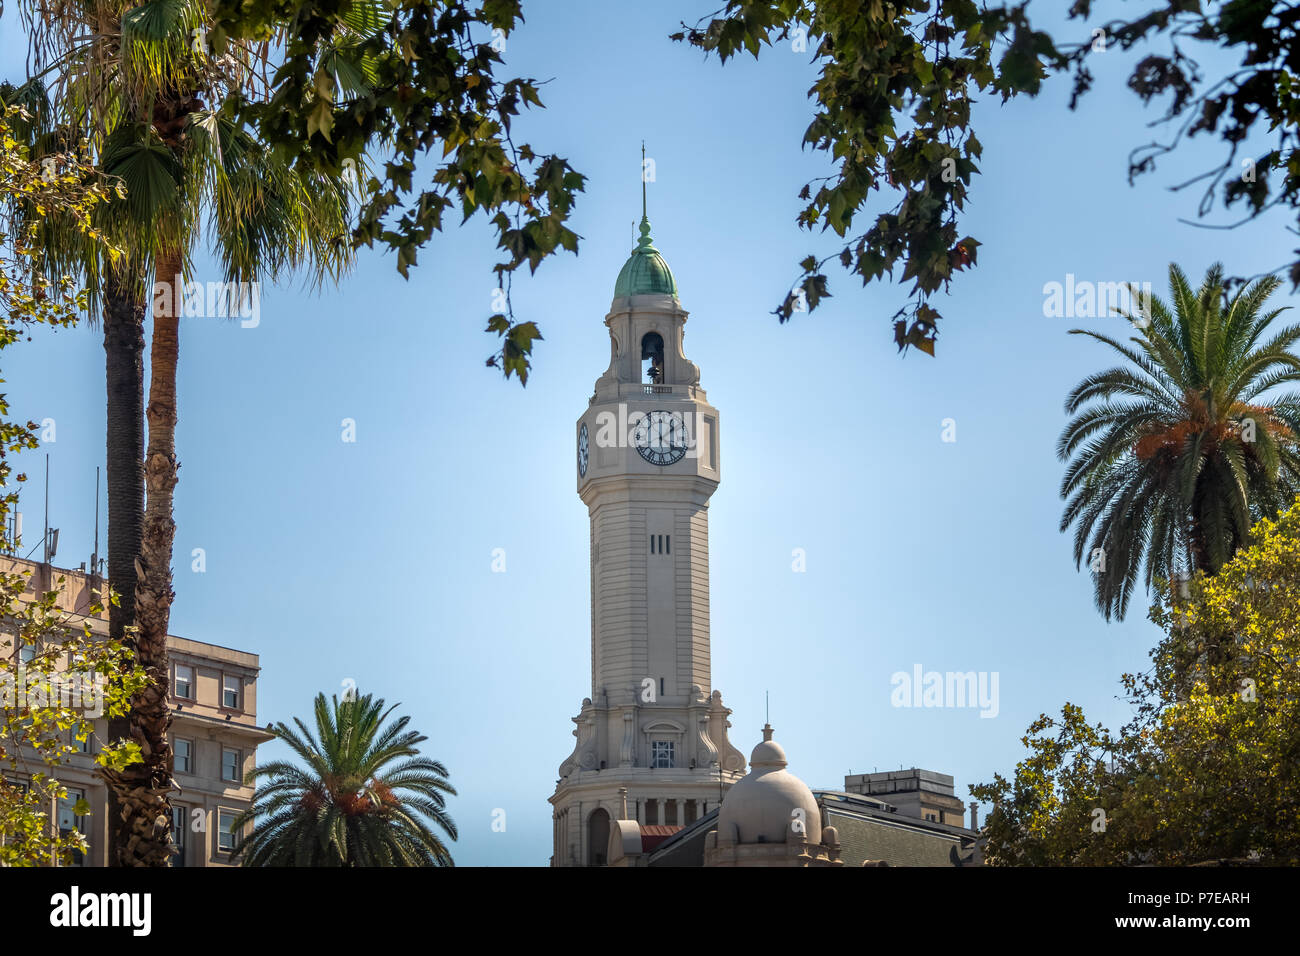 Torre de la Legislatura de la ciudad de Buenos Aires - Legislatura de la Ciudad de Buenos Aires - Buenos Aires, Argentina Foto de stock